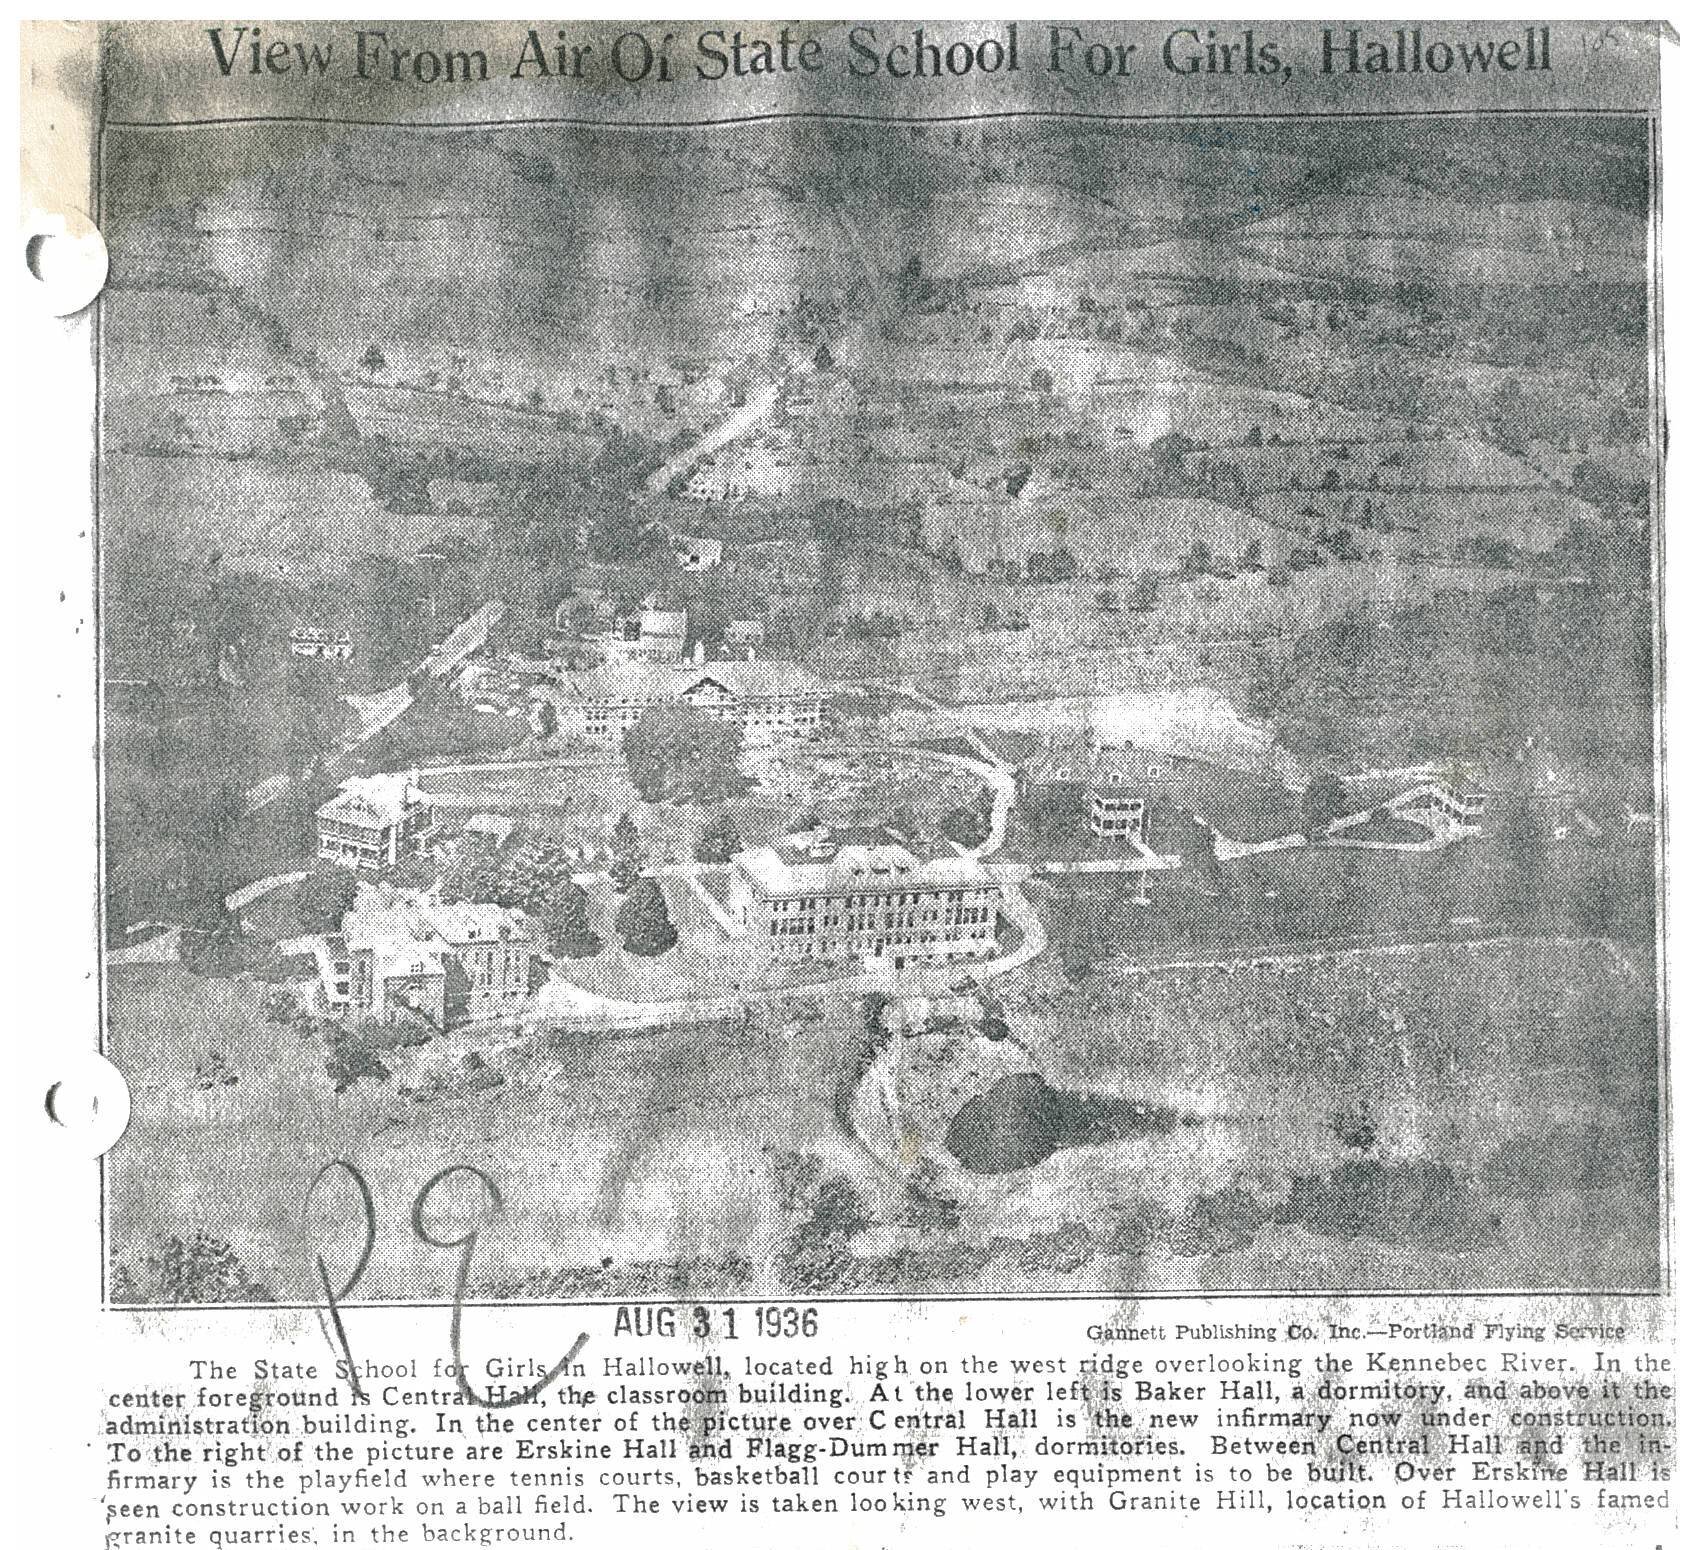 Stevens aerial view from newspaper article 9-31-36 (2).jpg